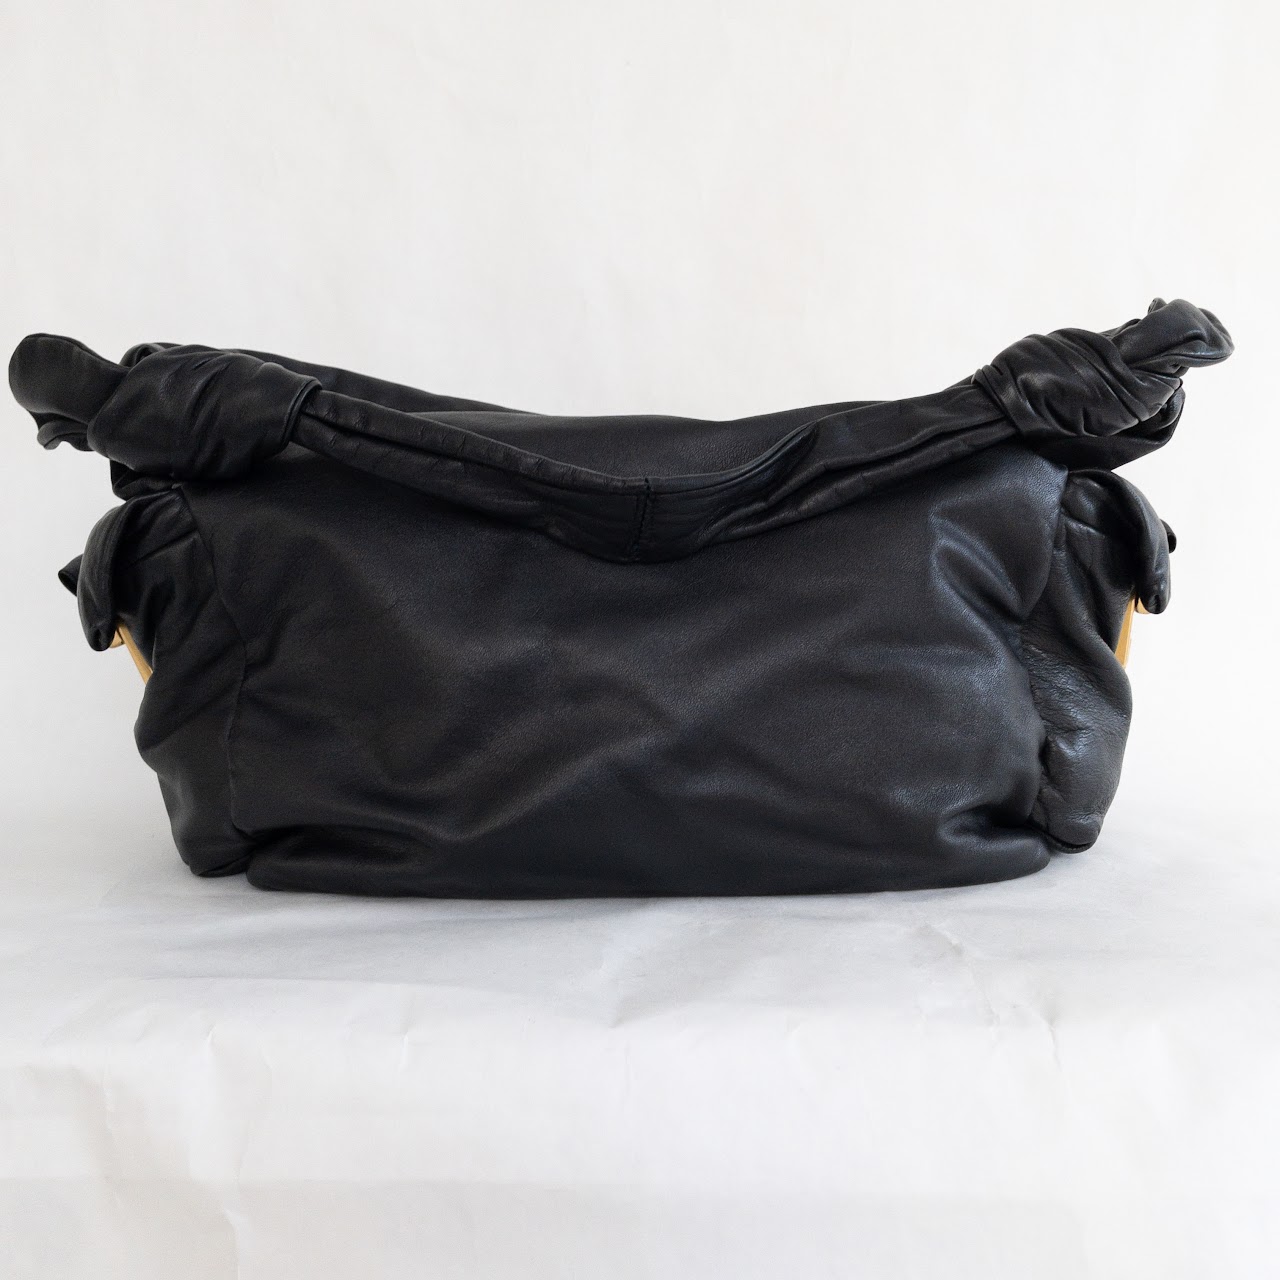 Marc Jacobs Leather Hobo Bag